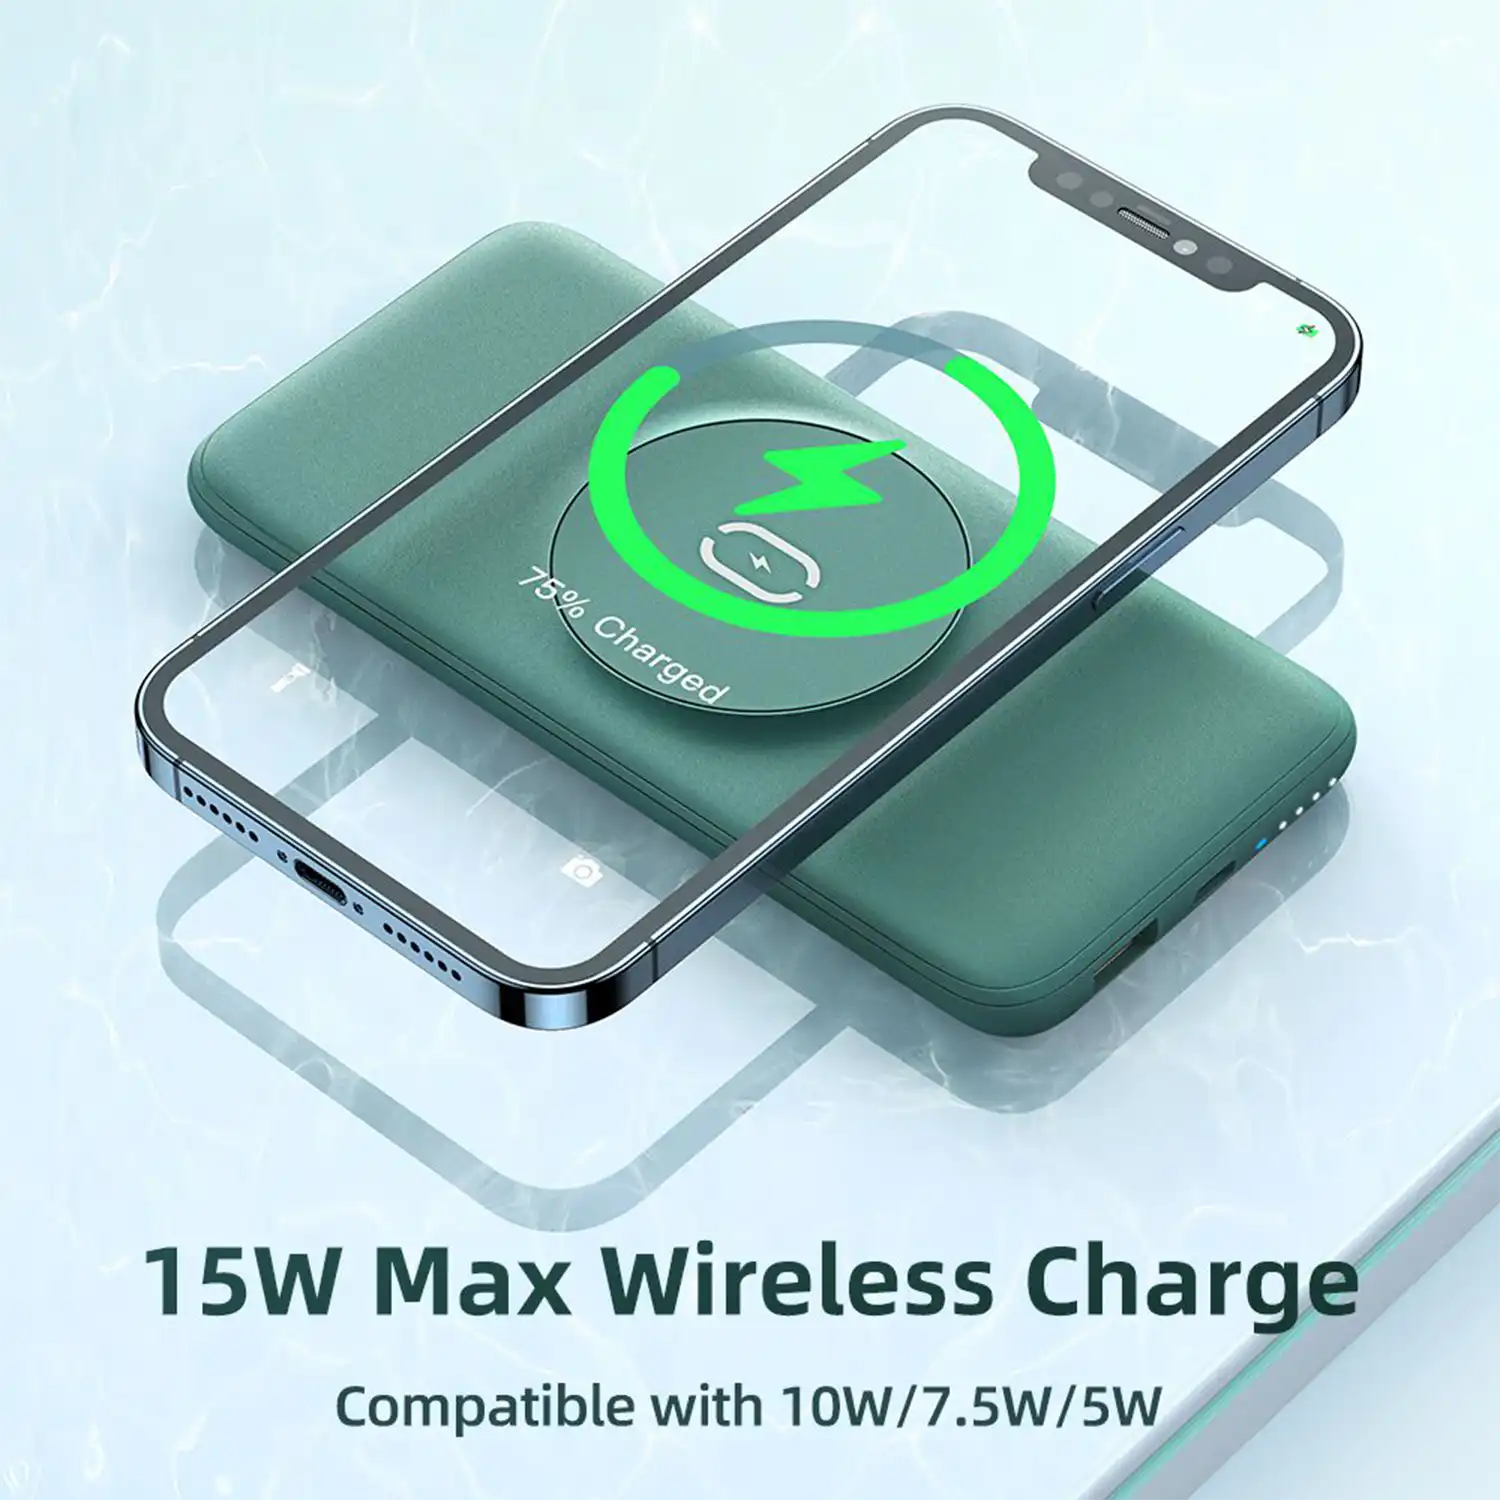 Mcdodo Milan Series 15W MagSafe Wireless Power Bank 10000mAh